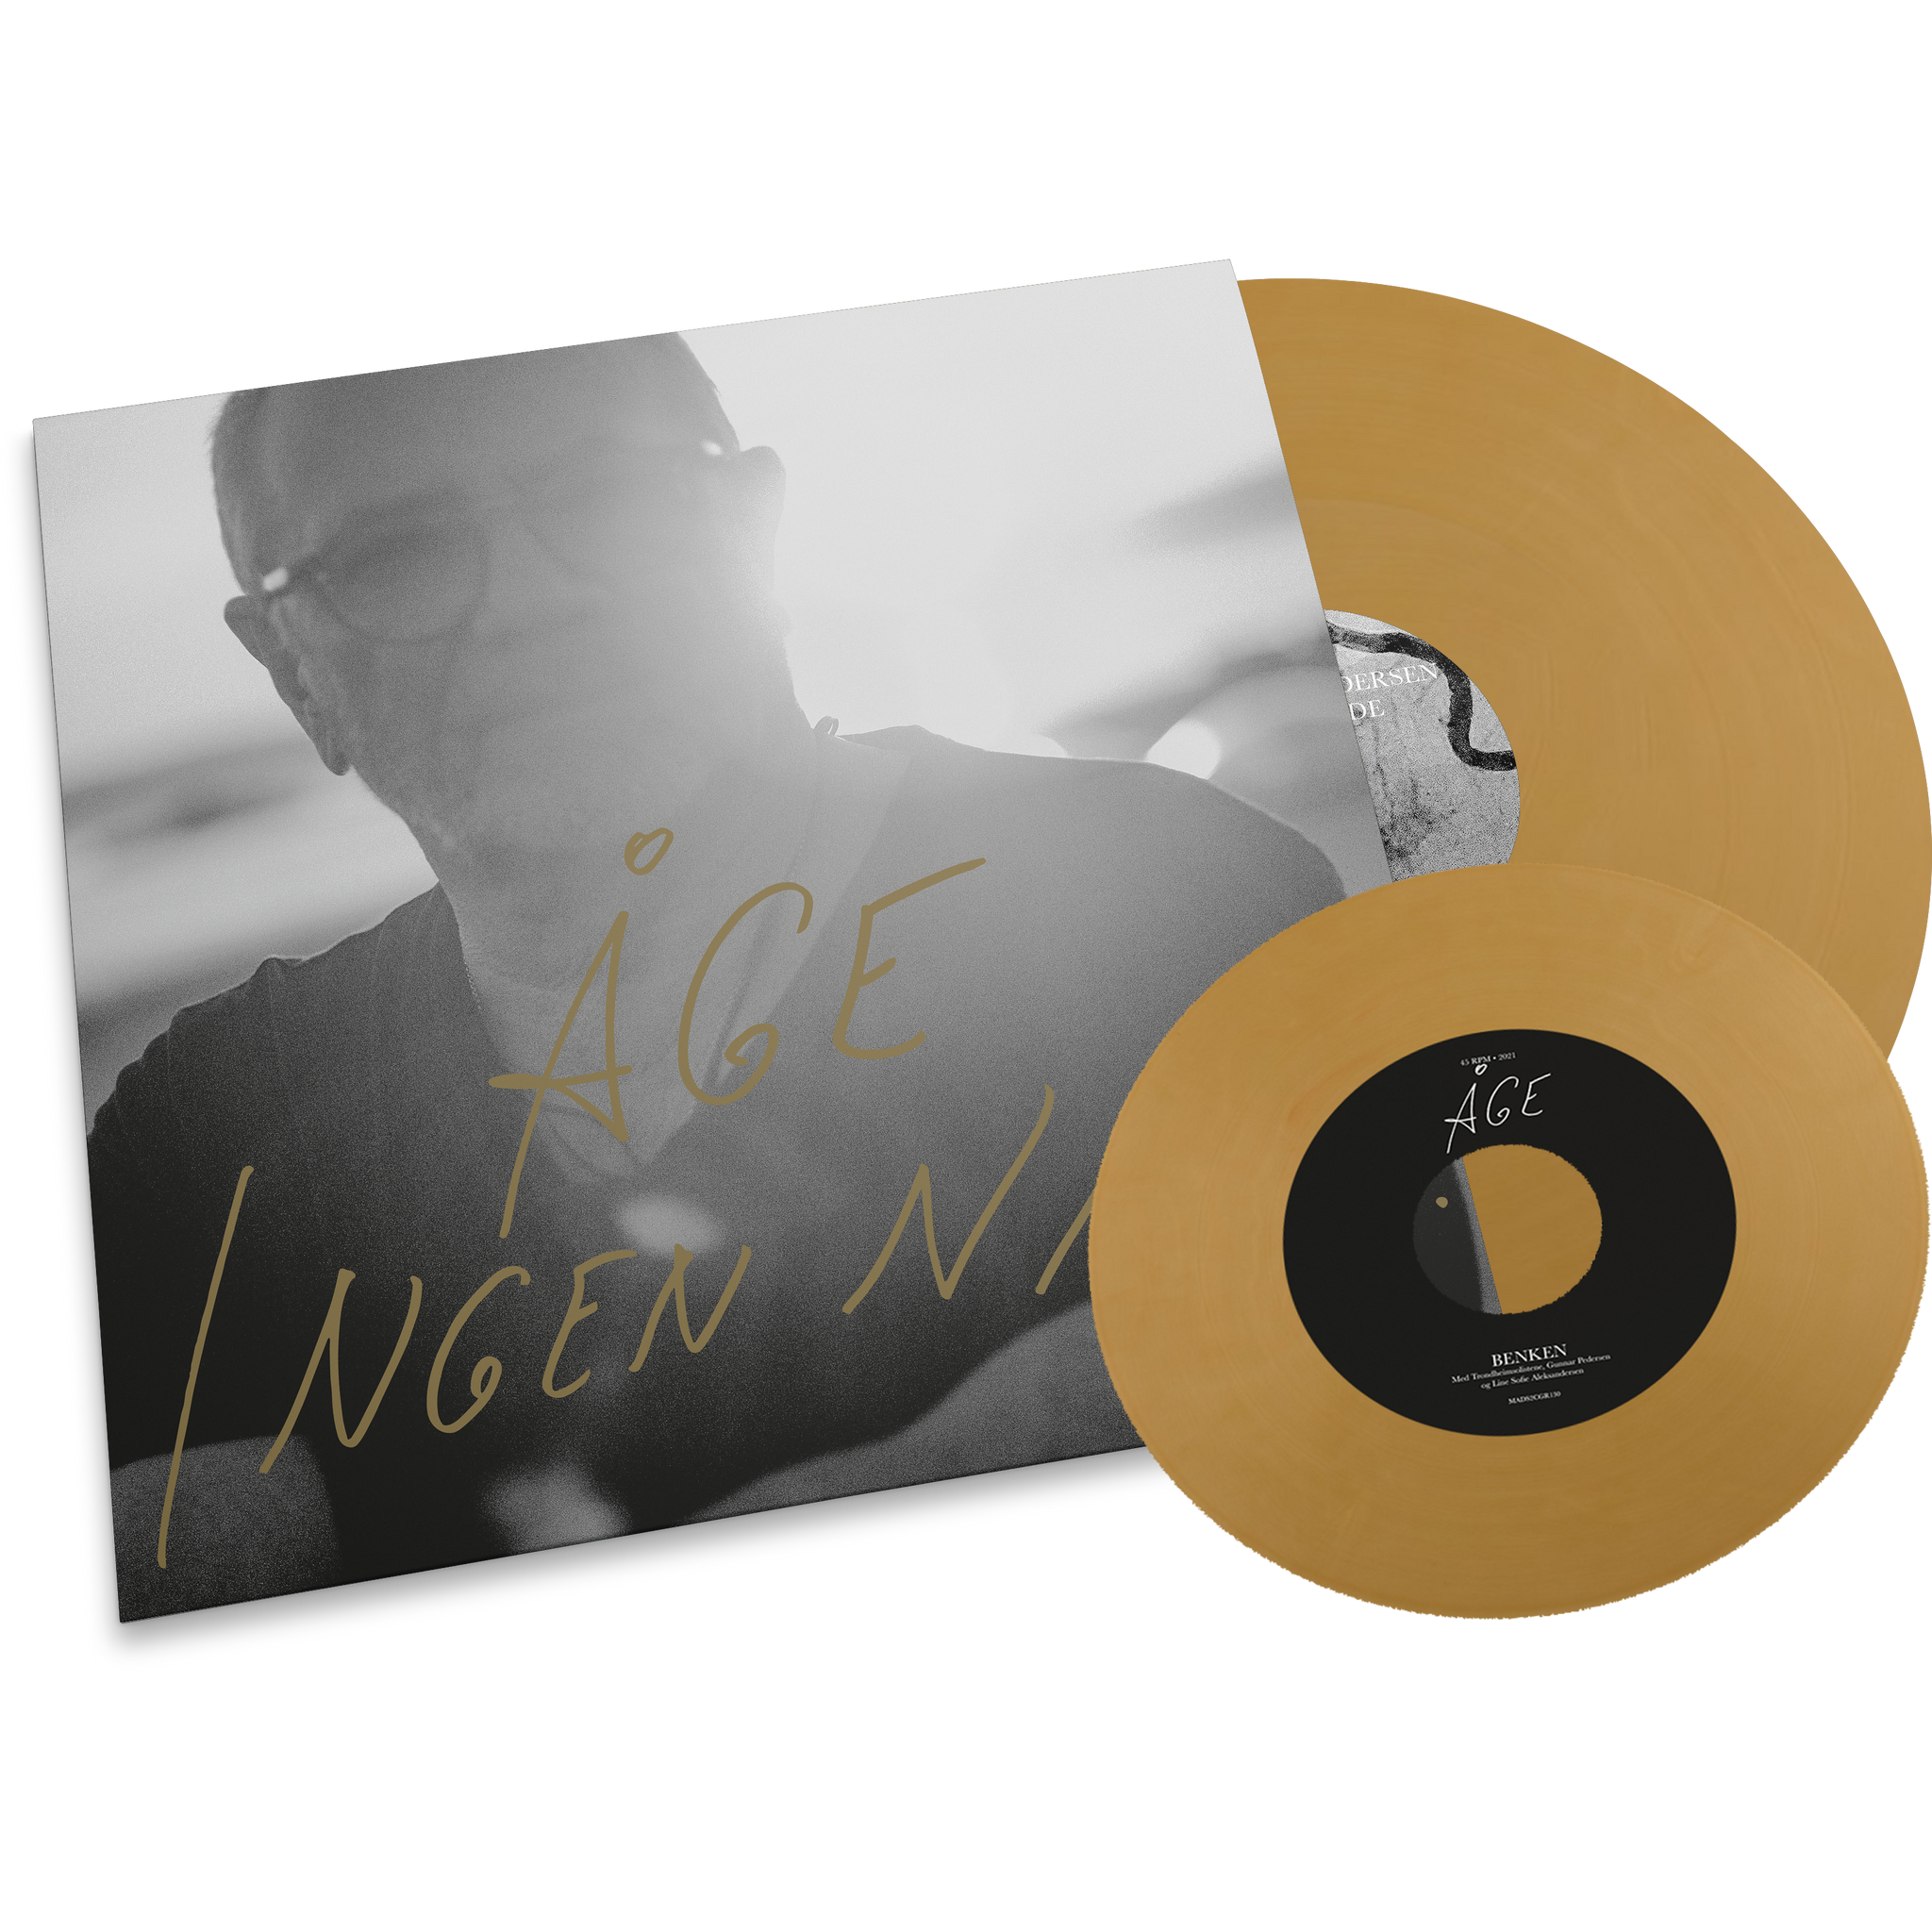 Åge Aleksandersen - "Ingen Nåde" (LTD gold vinyl w/ bonus 7" & CD)